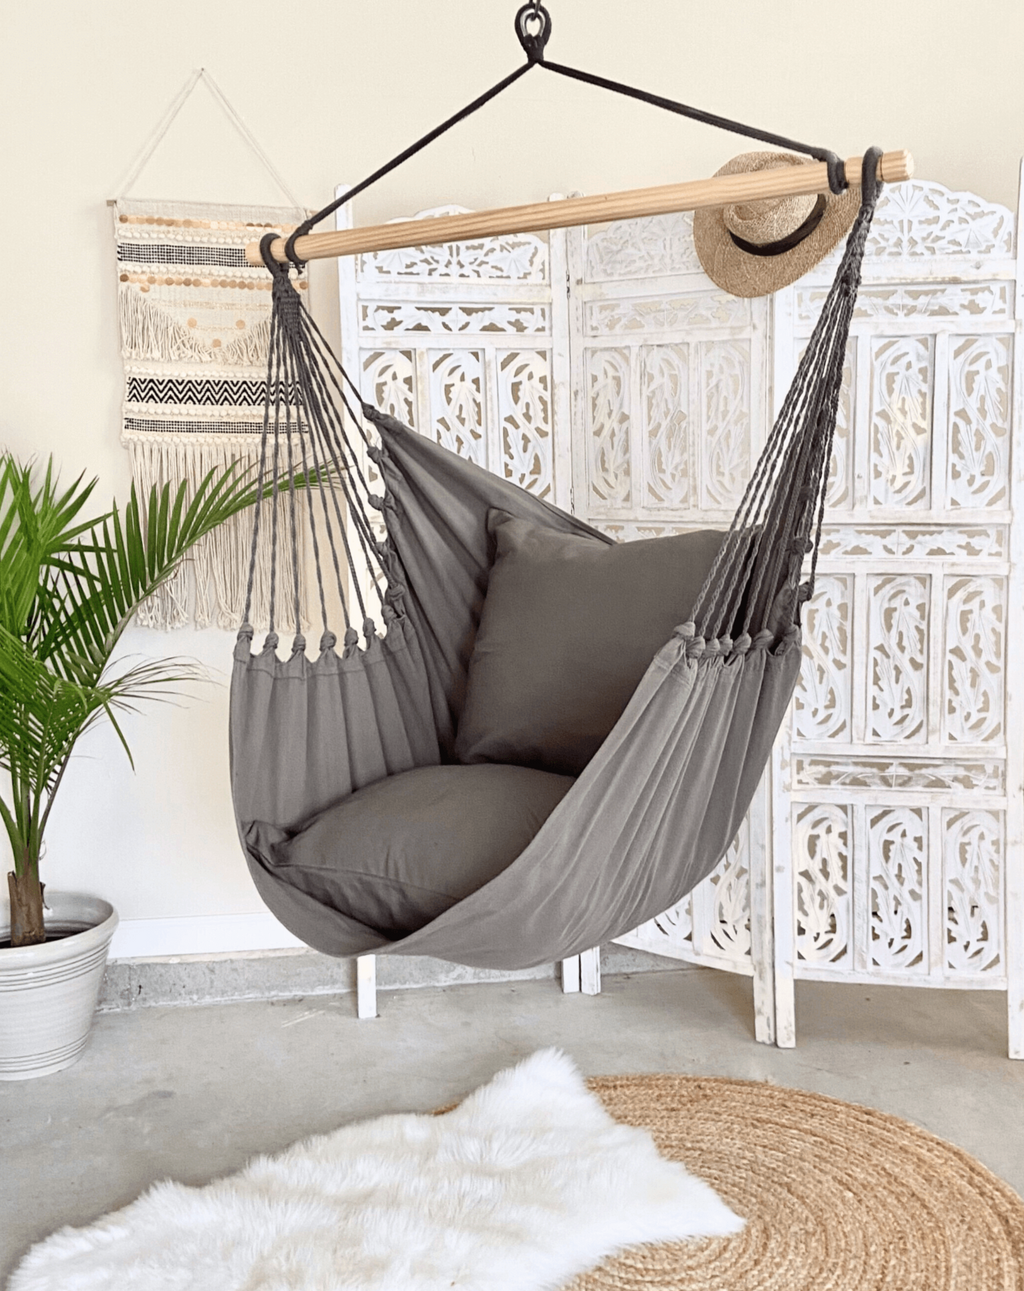 Boho Hammock Chair Swing  Tassel Fringe Lily Hanging Chair – Limbo Imports  Hammocks